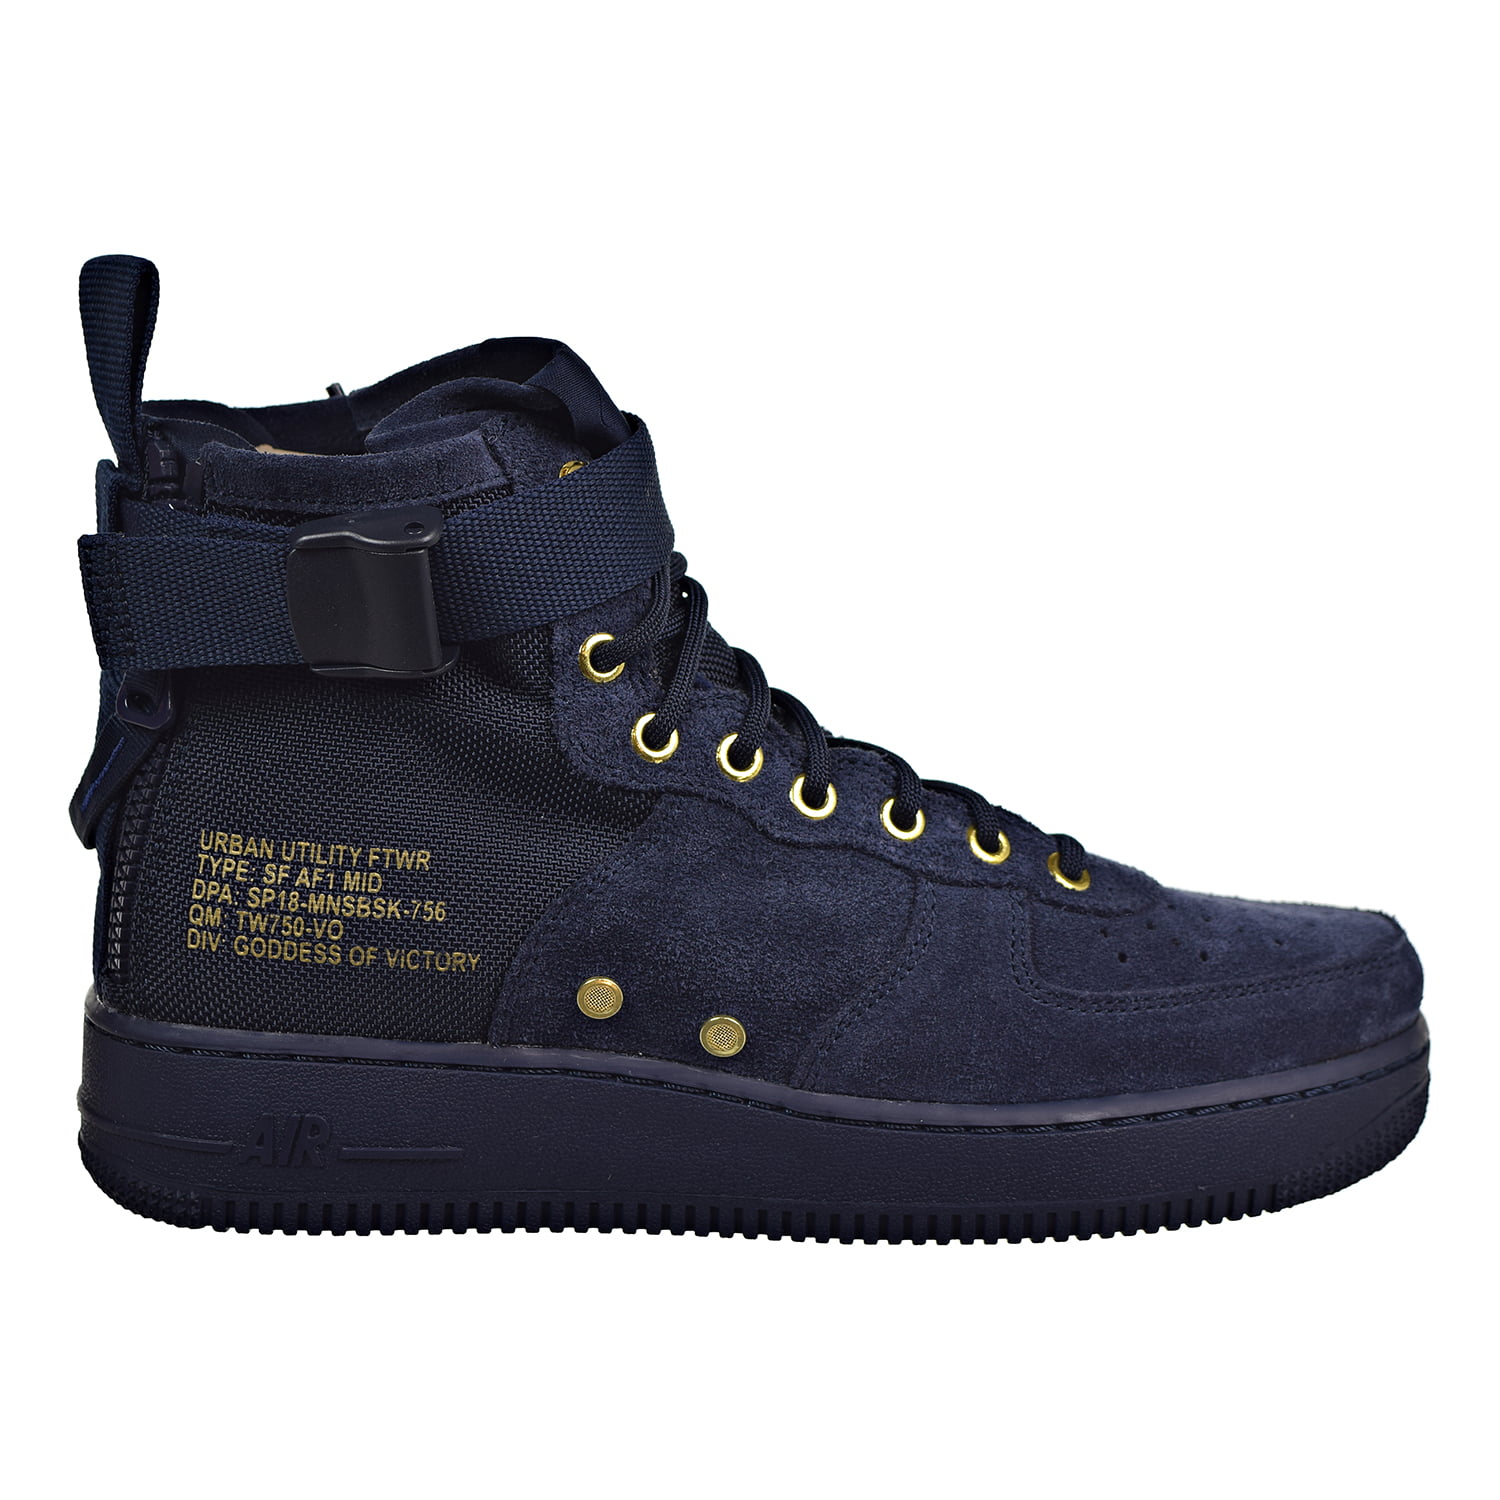 SF Air Force 1 Mid Mens Fashion Sneakers Obsidian/ Obsidian- 917753-400 US) - Walmart.com